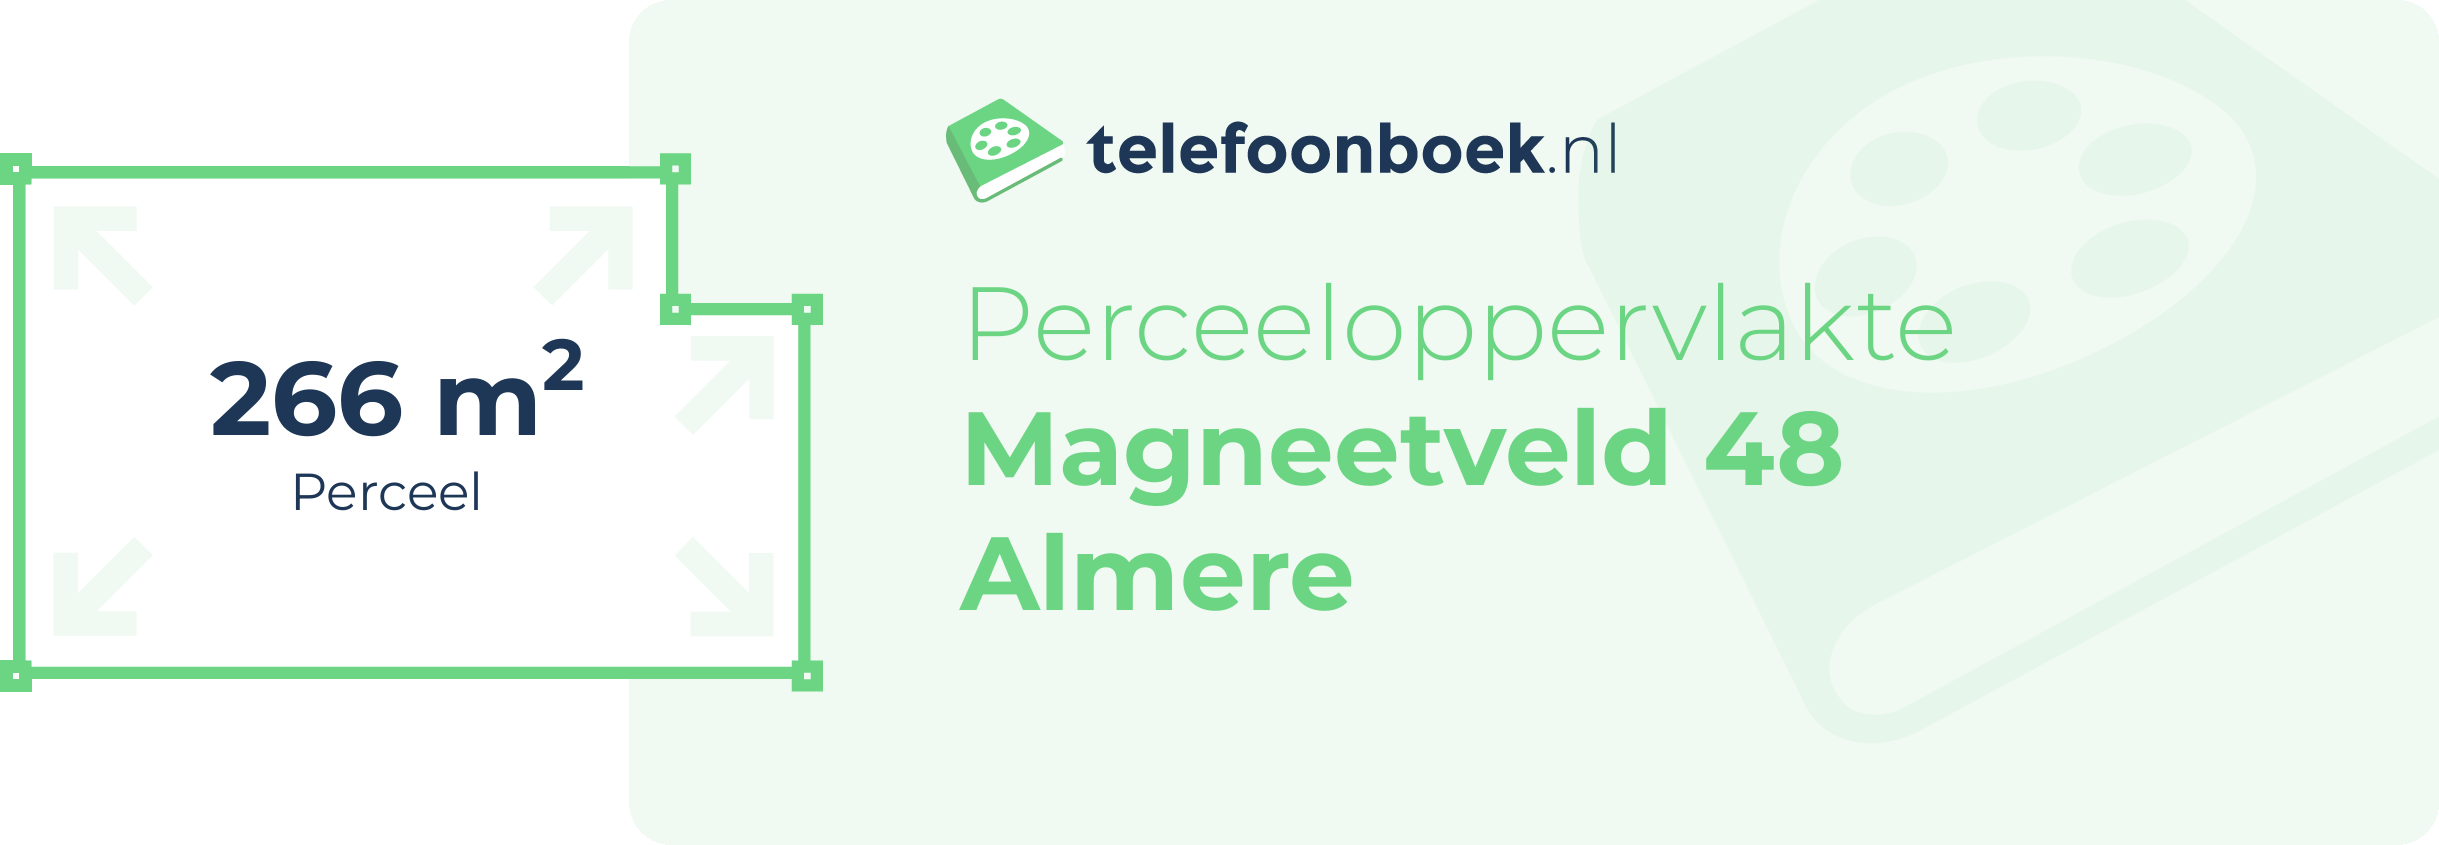 Perceeloppervlakte Magneetveld 48 Almere